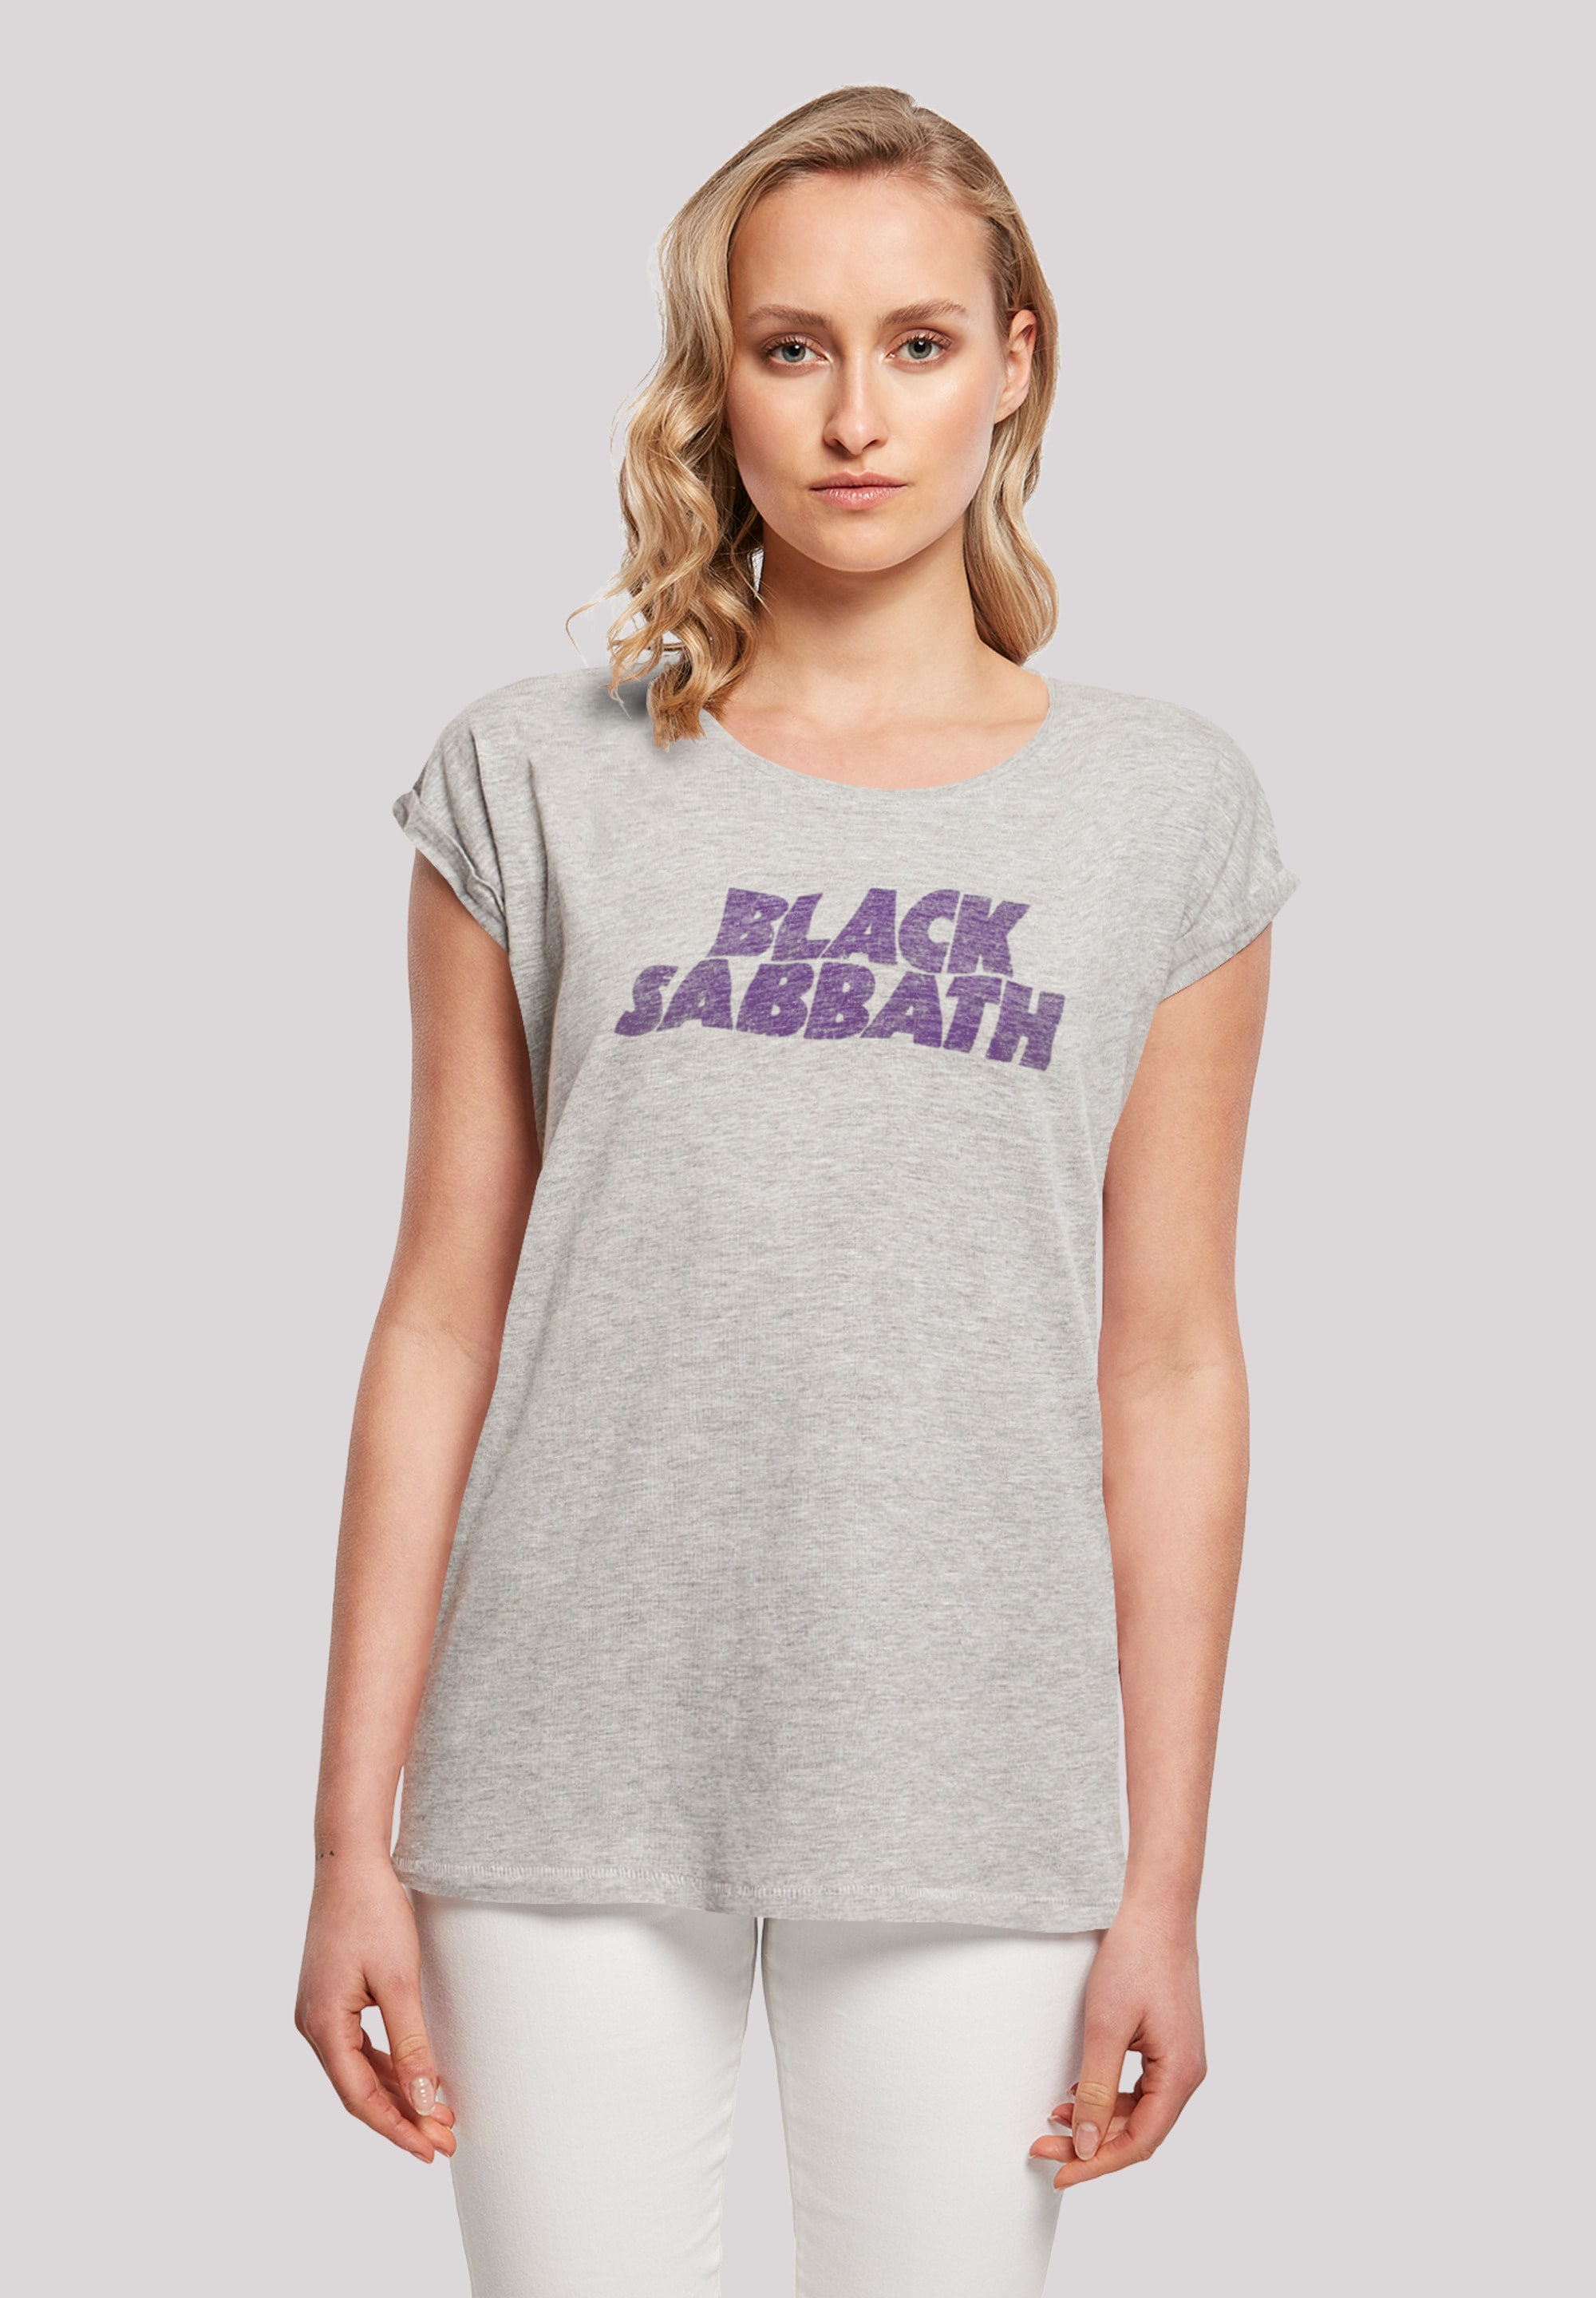 Print Heavy Metal kaufen Black«, Distressed F4NT4STIC Band »Black Wavy Sabbath T-Shirt Logo